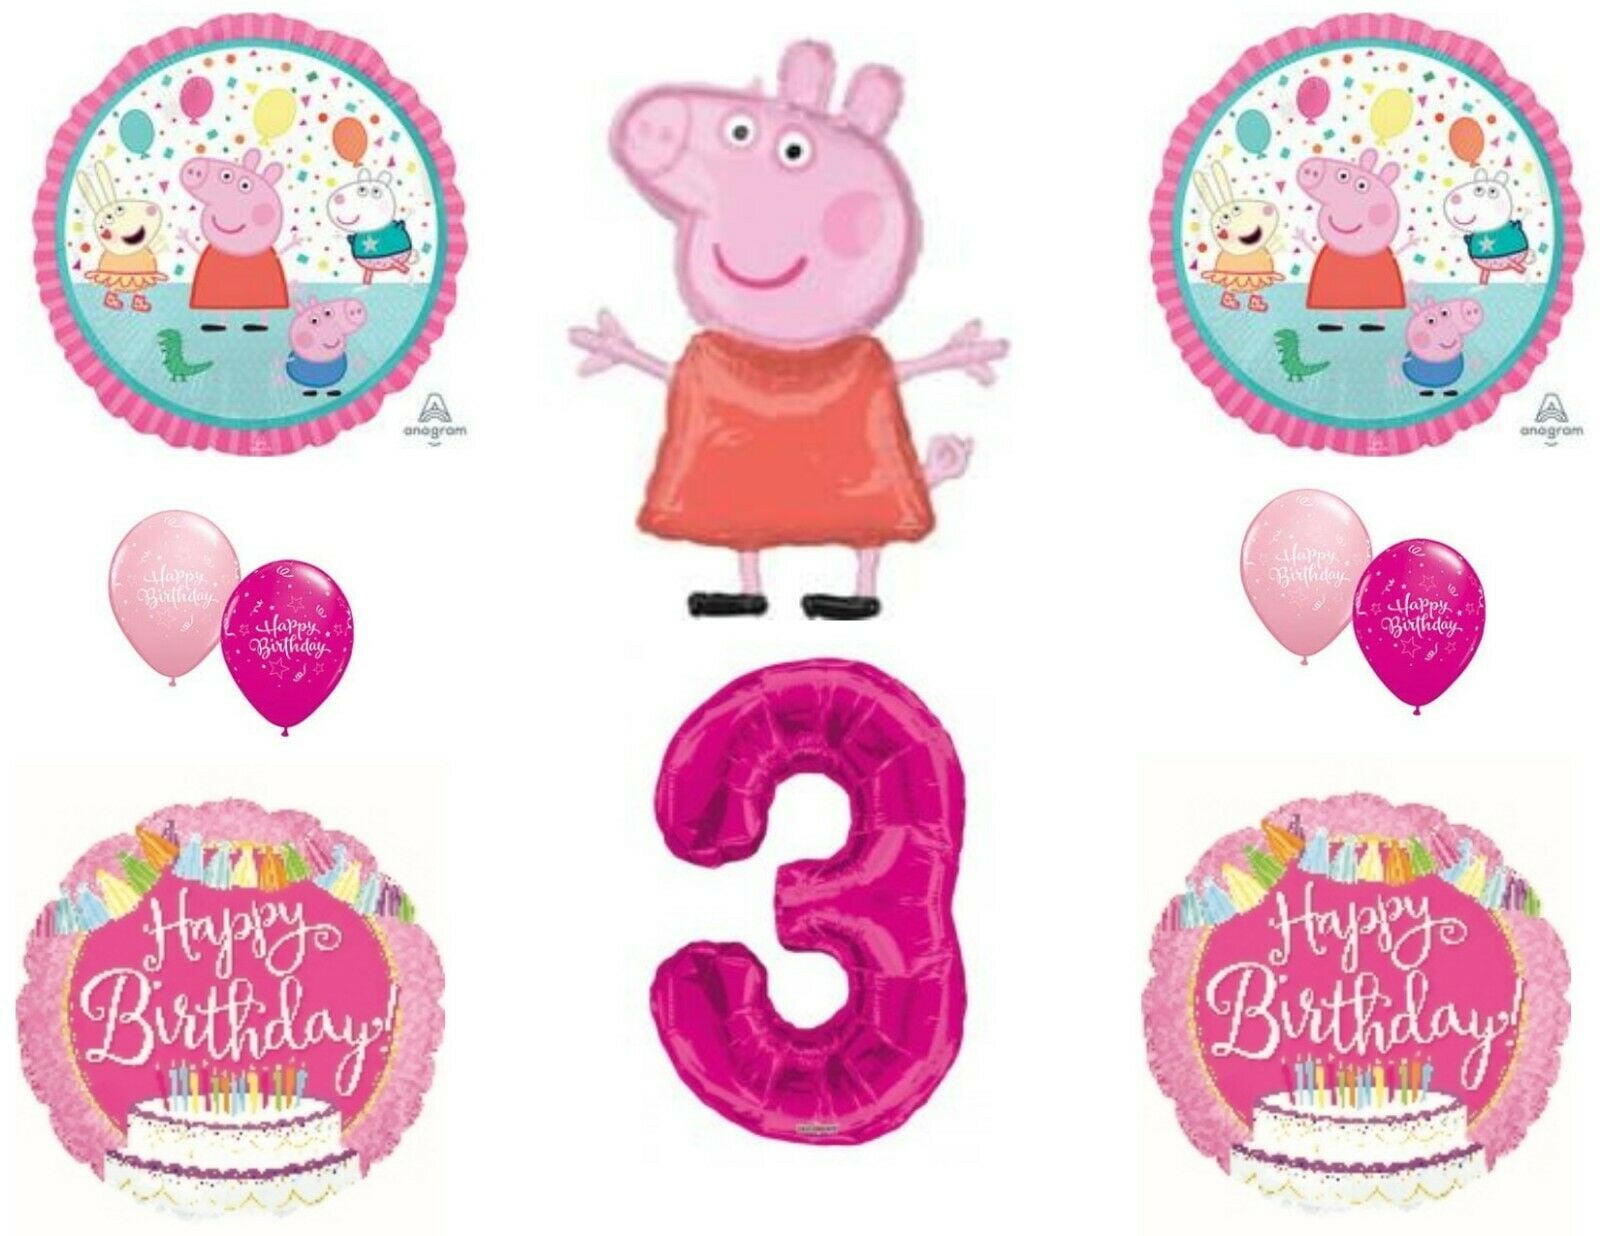 Diy peppa pig birthday cake | Peppa pig birthday cake, Pig birthday cakes, Peppa  pig cake